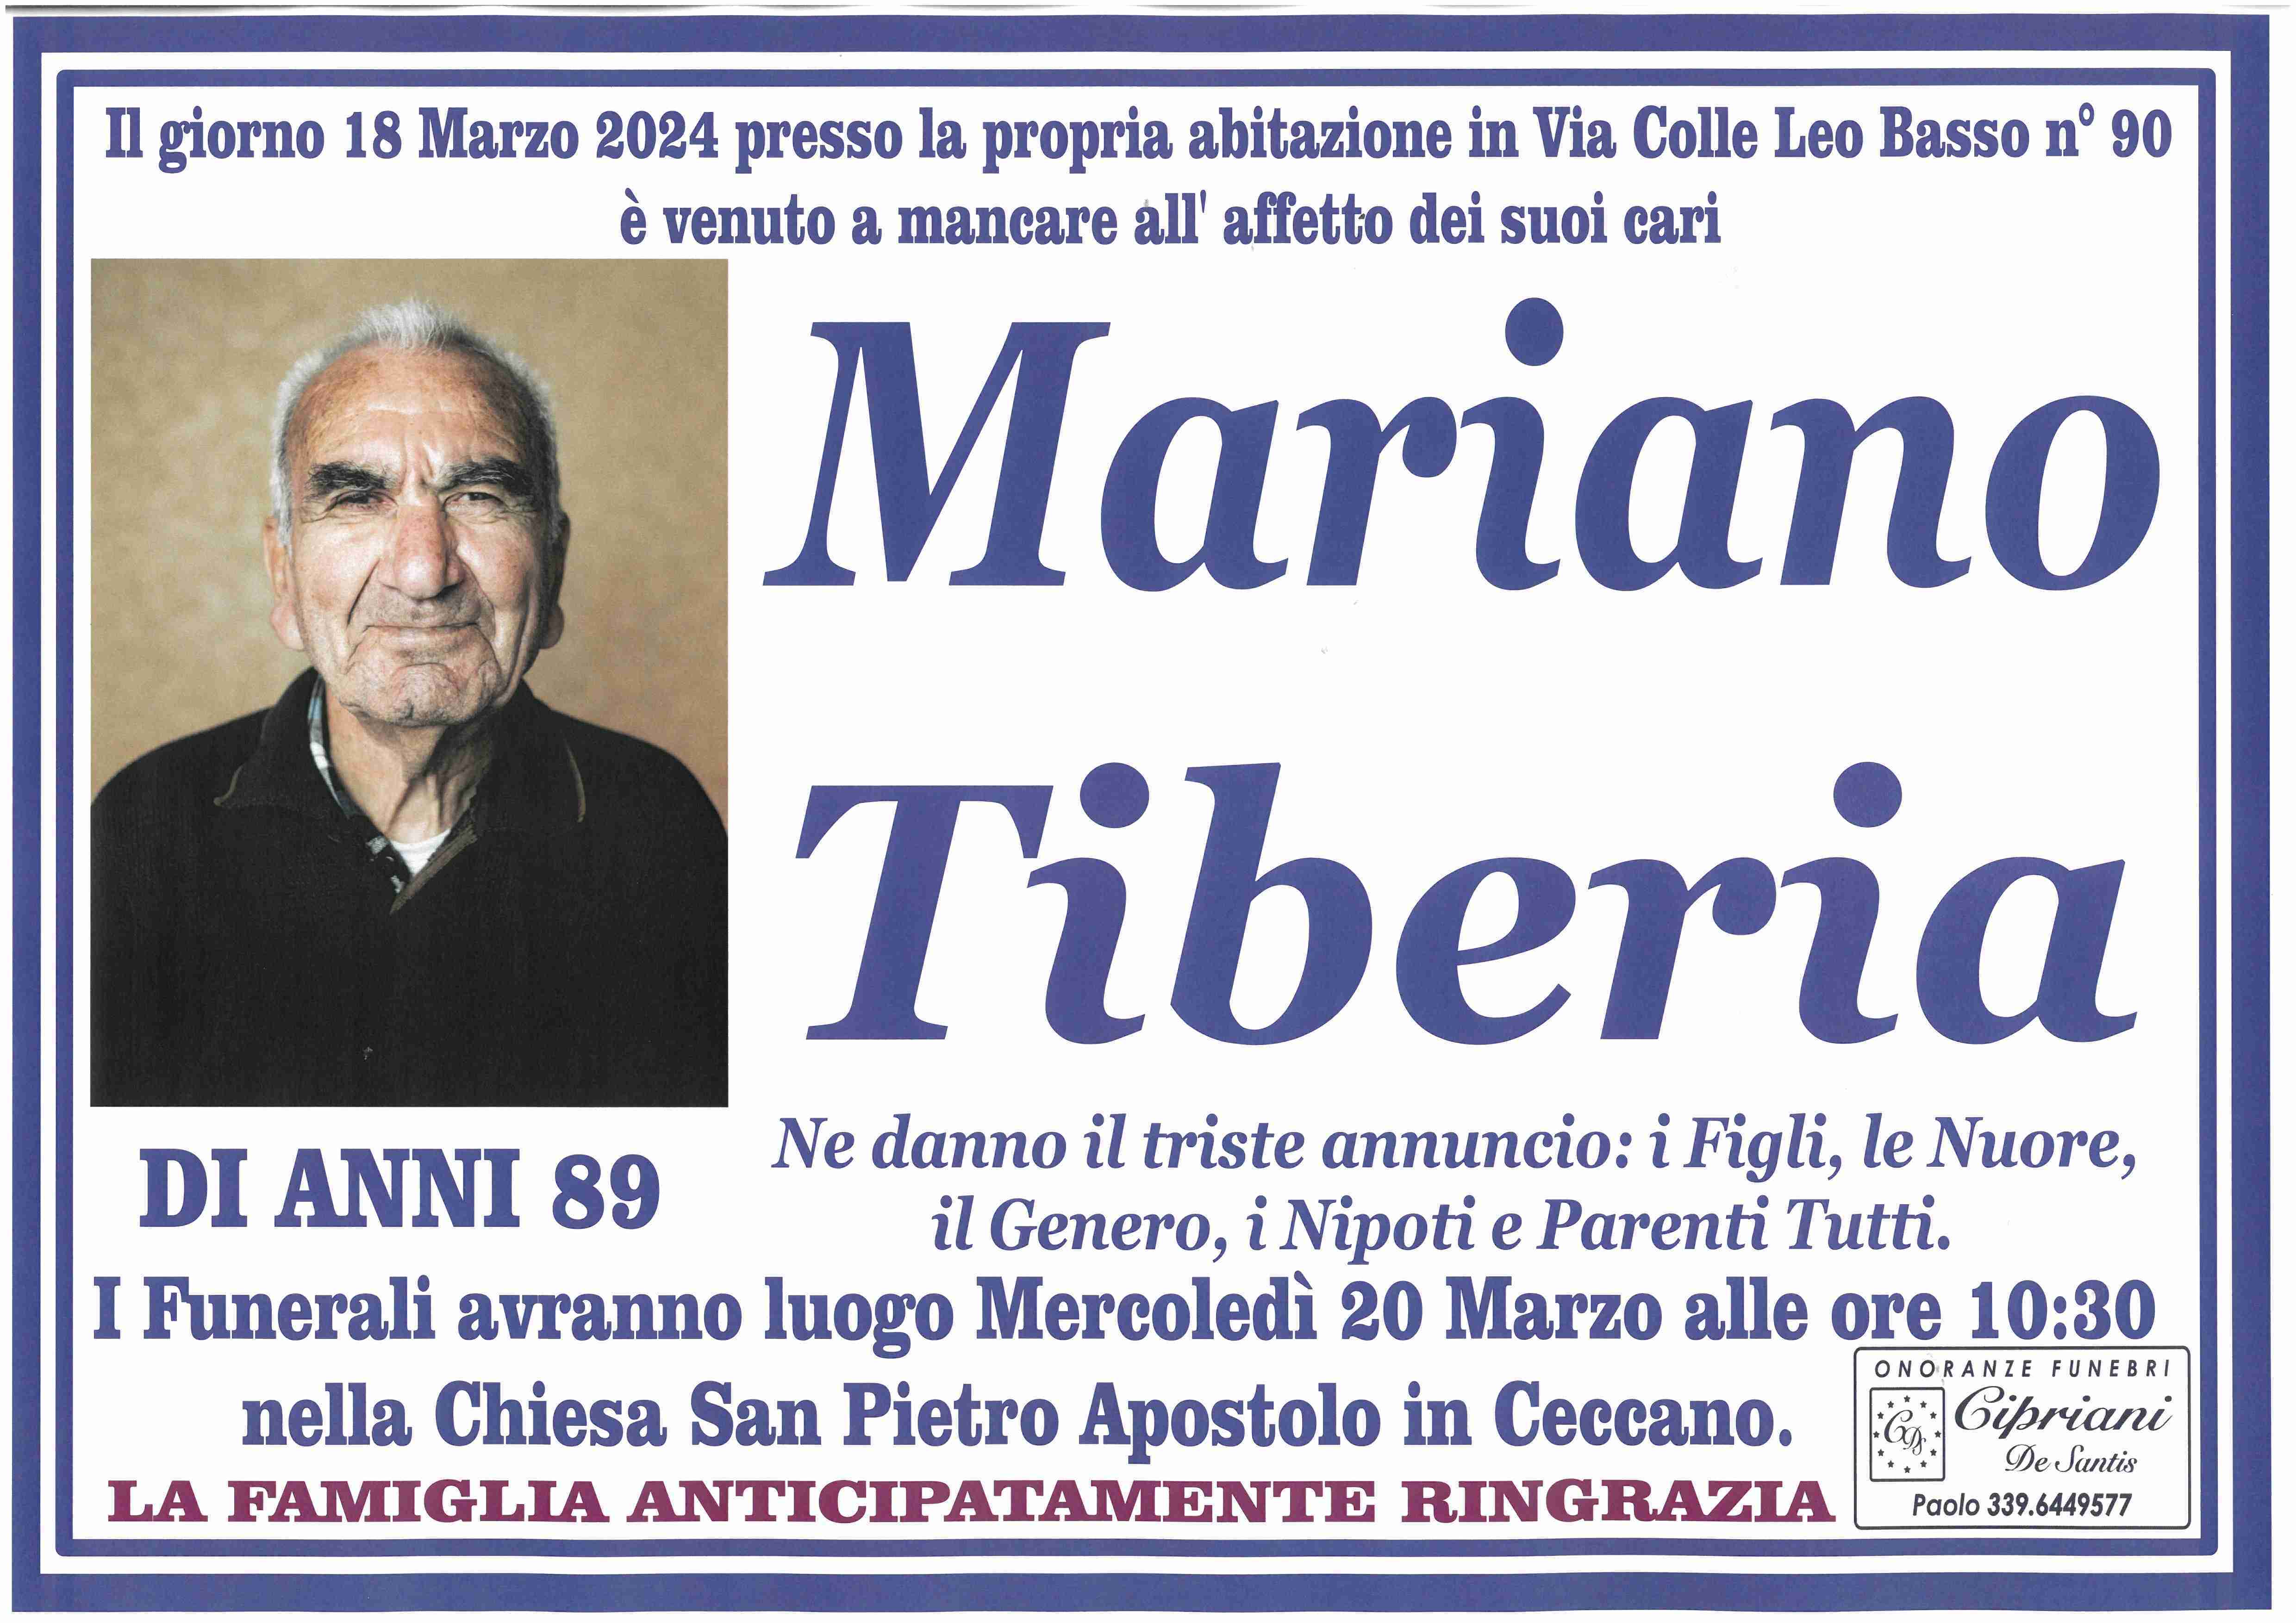 Mariano Tiberia